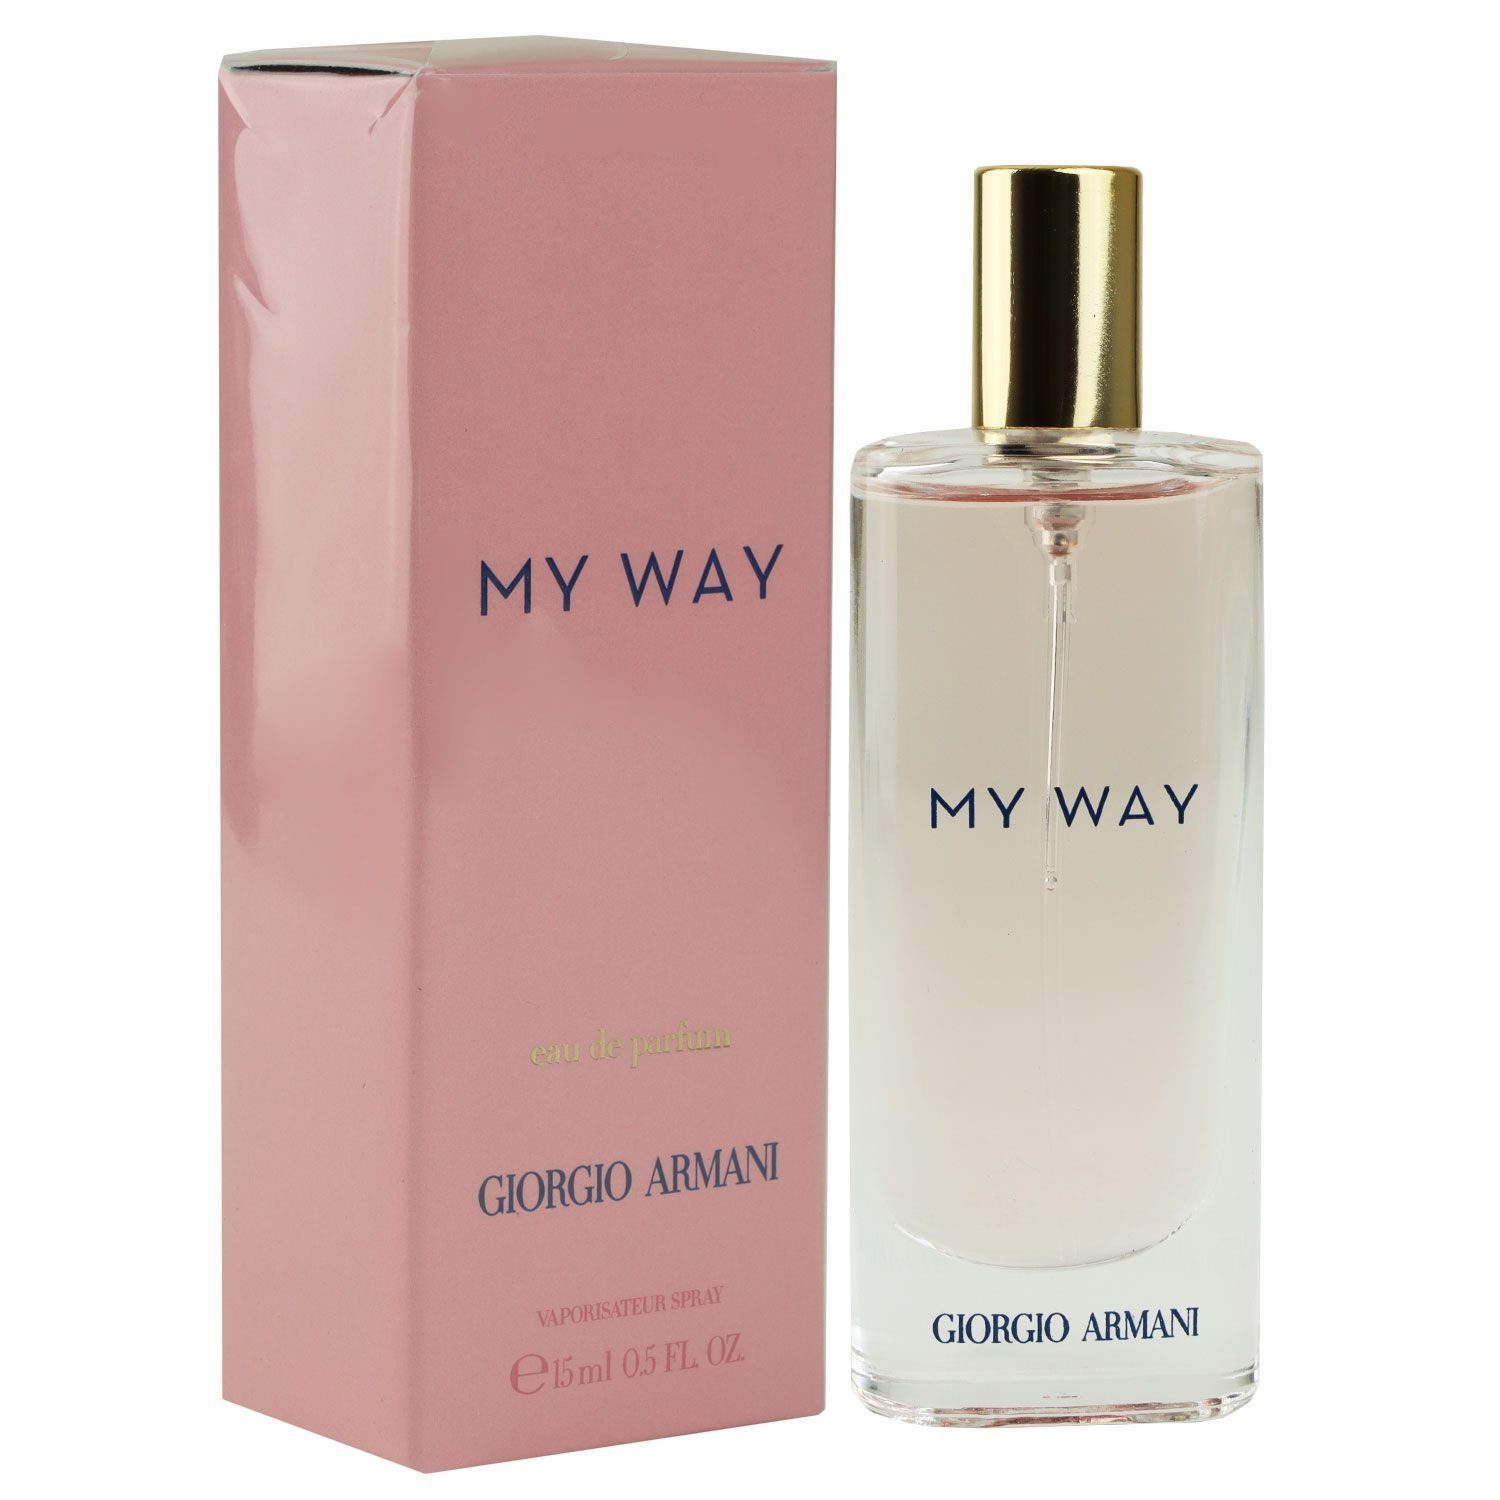 Giorgio Armani 15 Parfum My de ml Way Eau